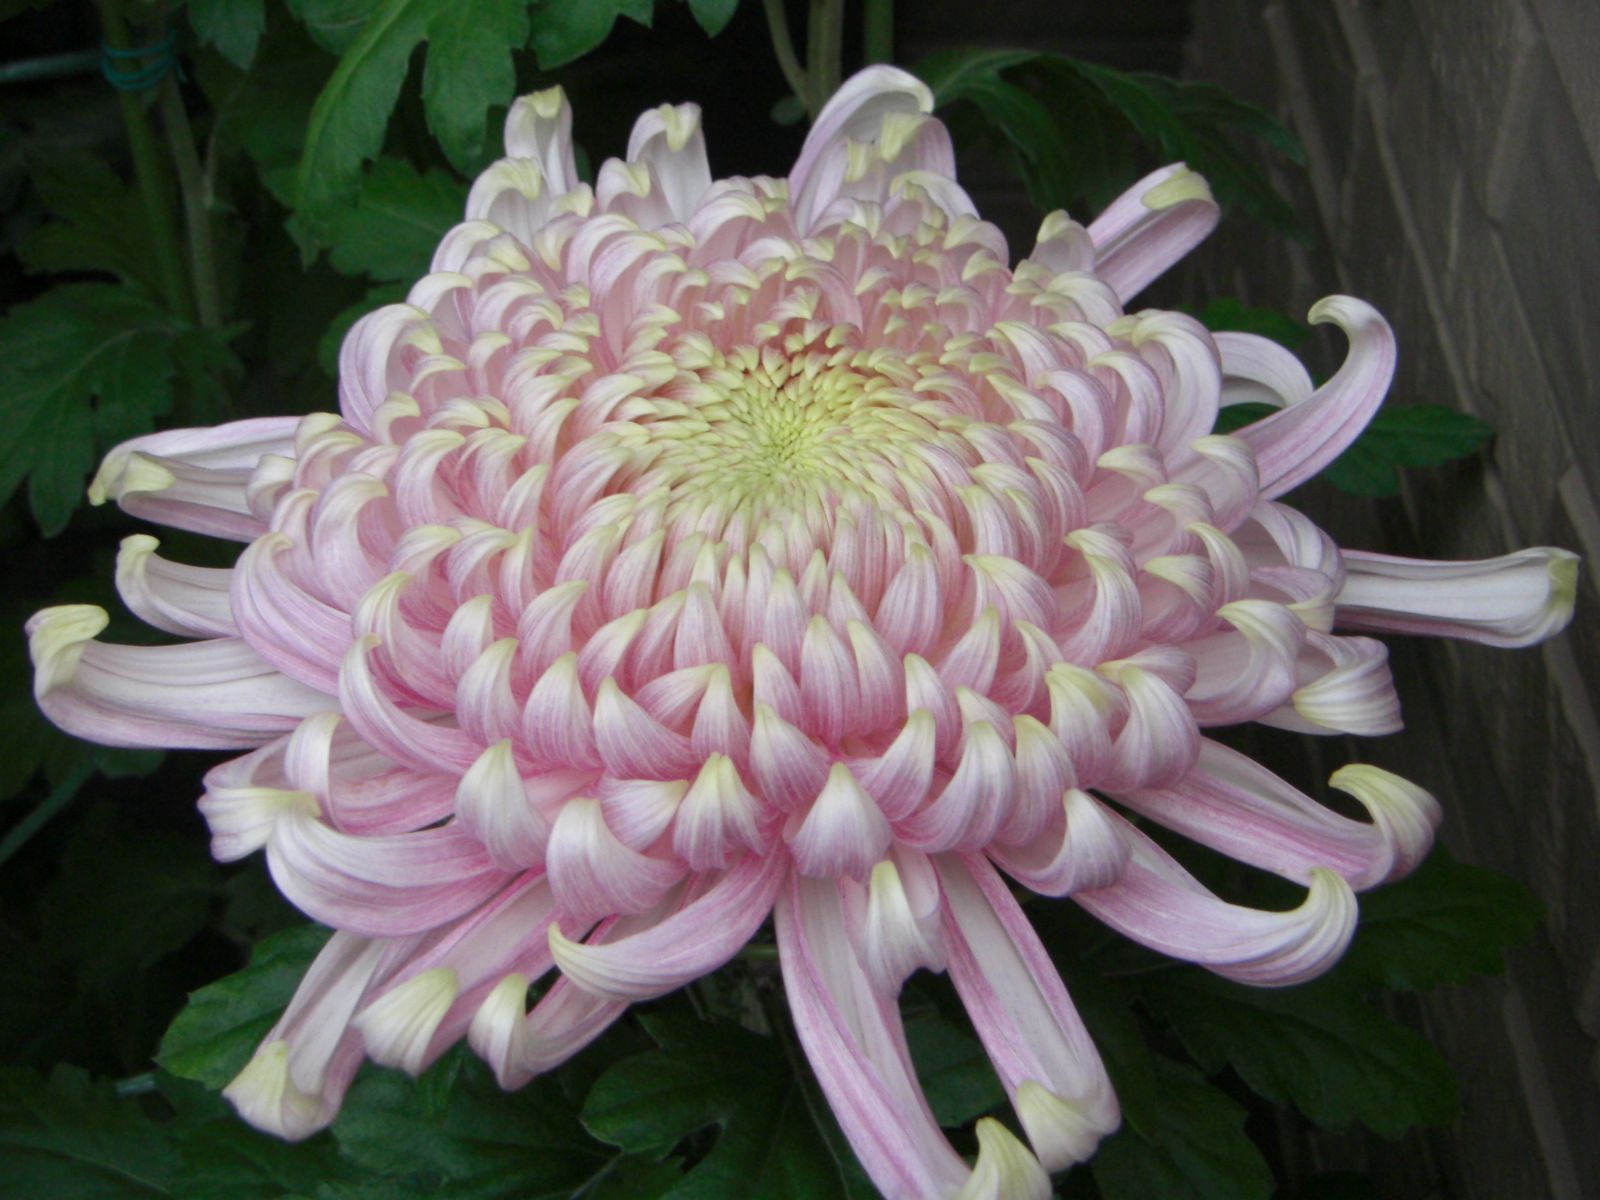 japanese chrysanthemum - Google Search | Chrysanthemums | Pinterest ...